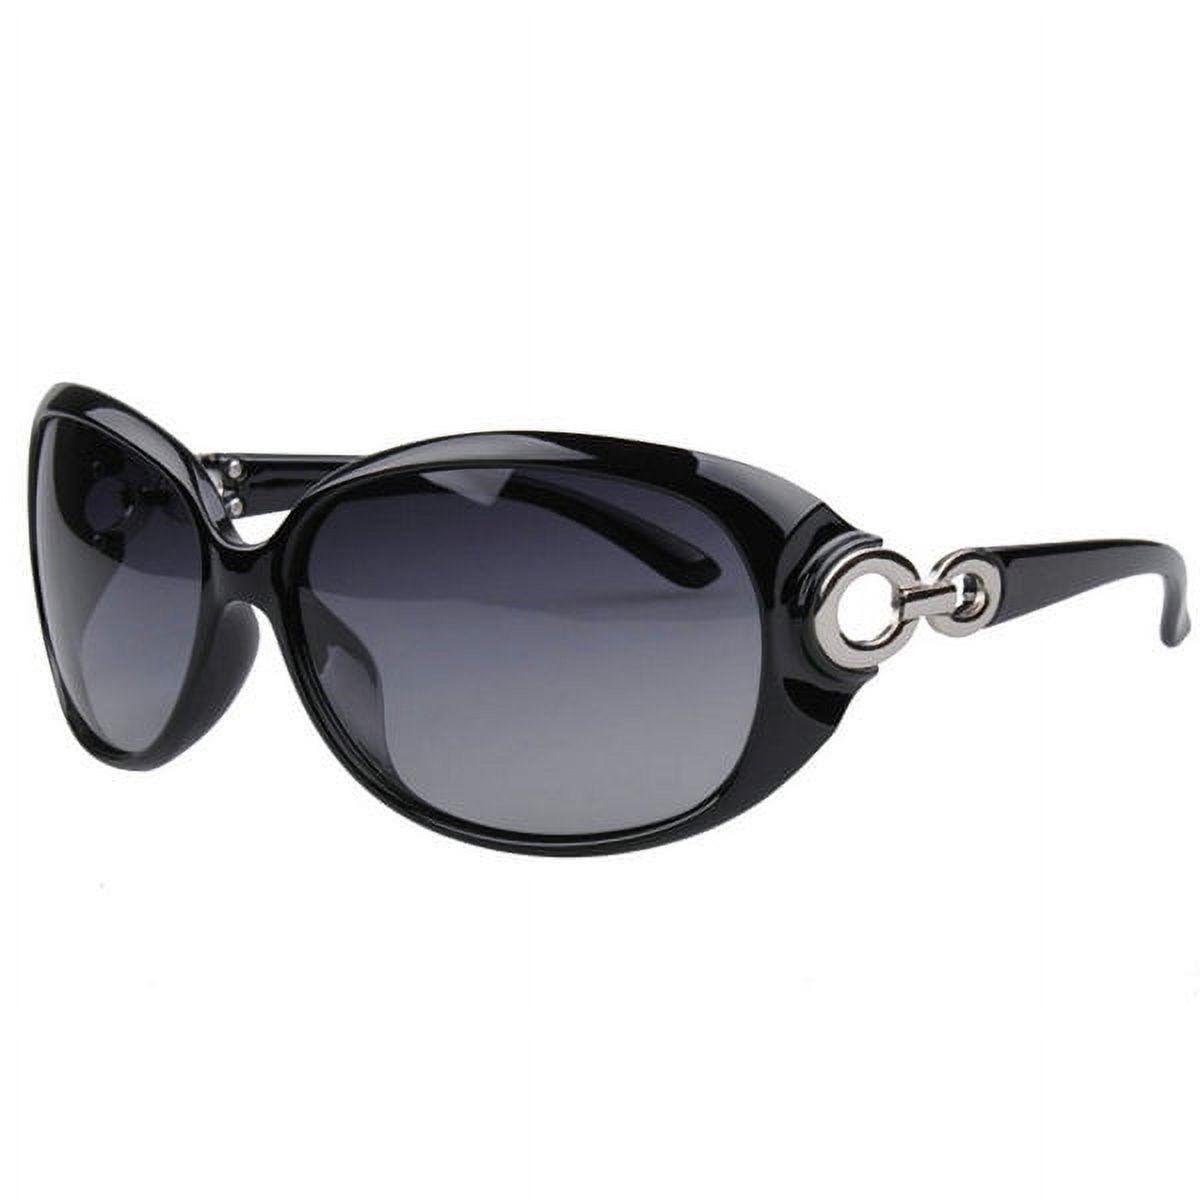 Womens Sunglasses Fashion Sun Glasses UV Protection Sunglasses - image 1 of 8